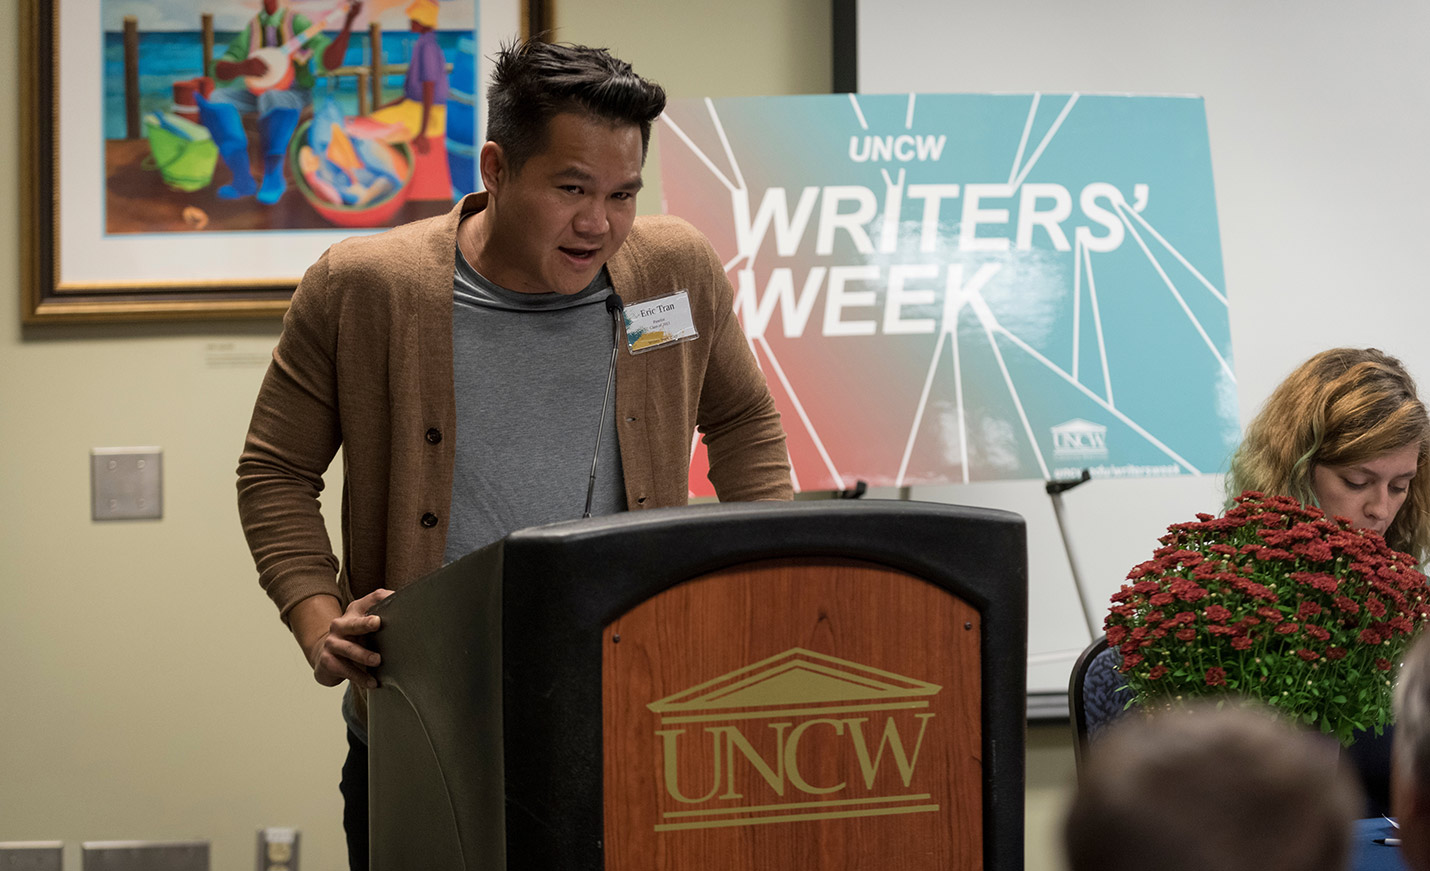 Writers' Week speaker at a podium